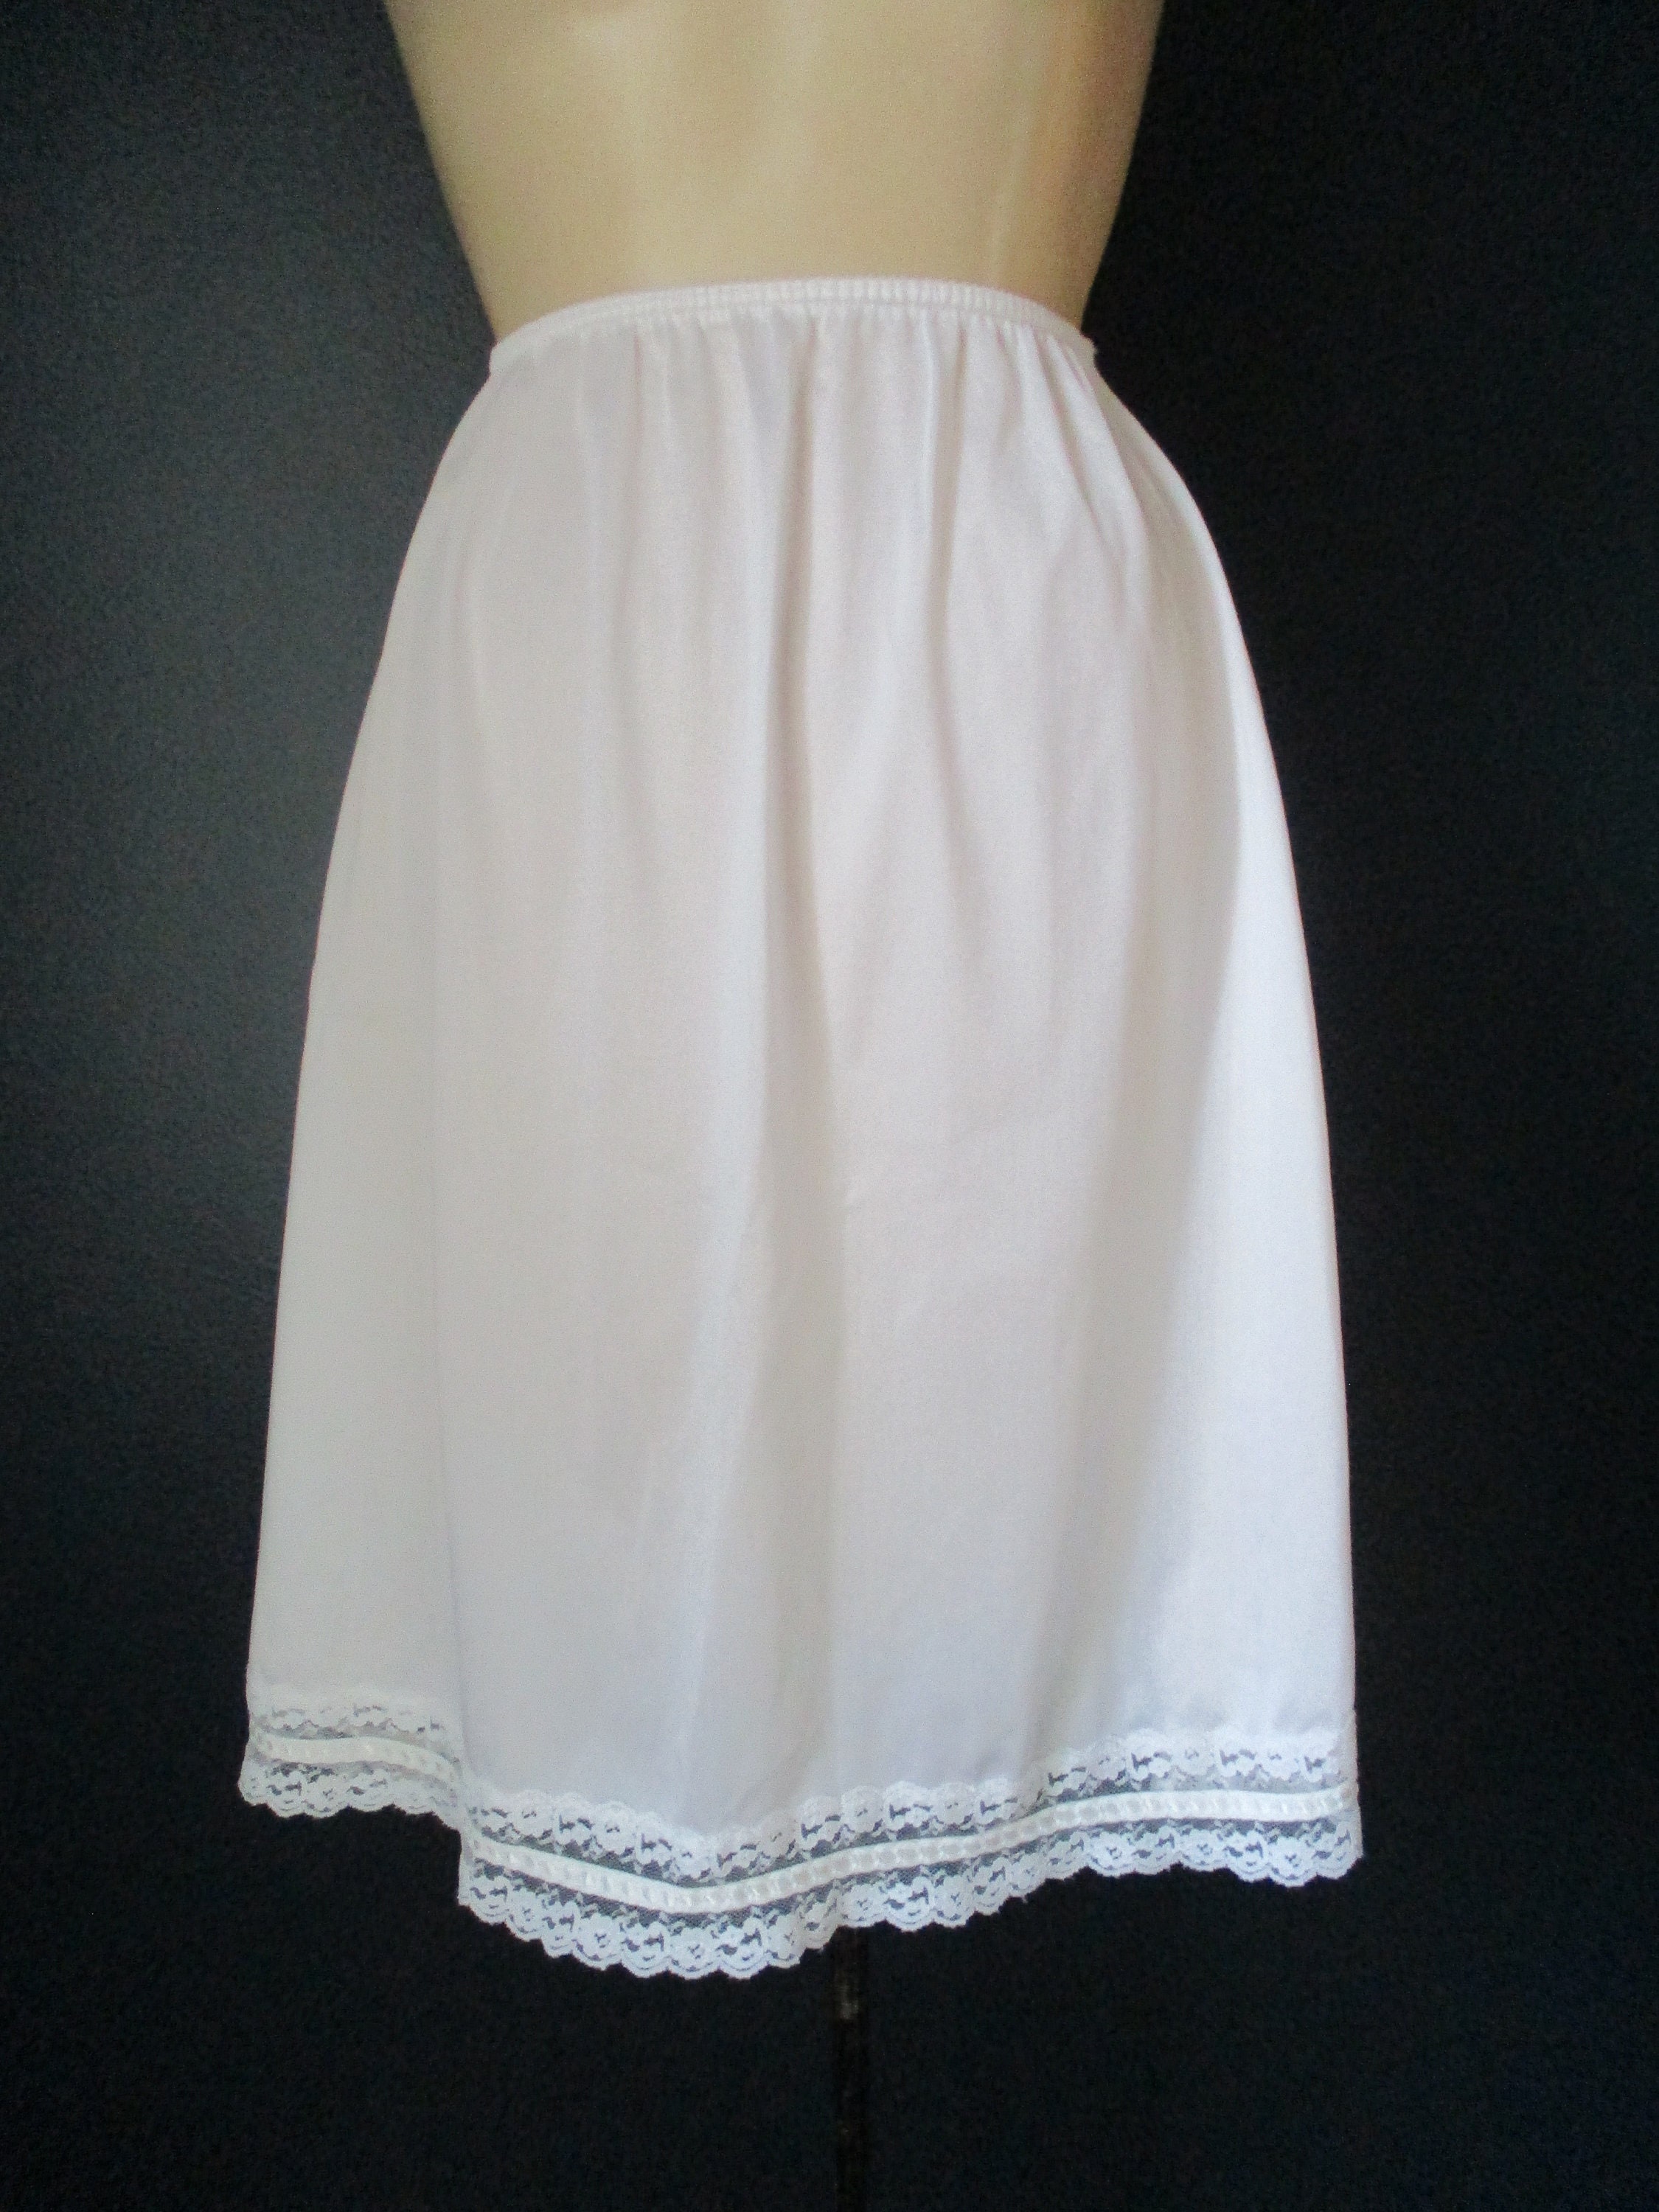 Turkish Cotton Mini Half Dress Slip , White, Black Gauze Cotton